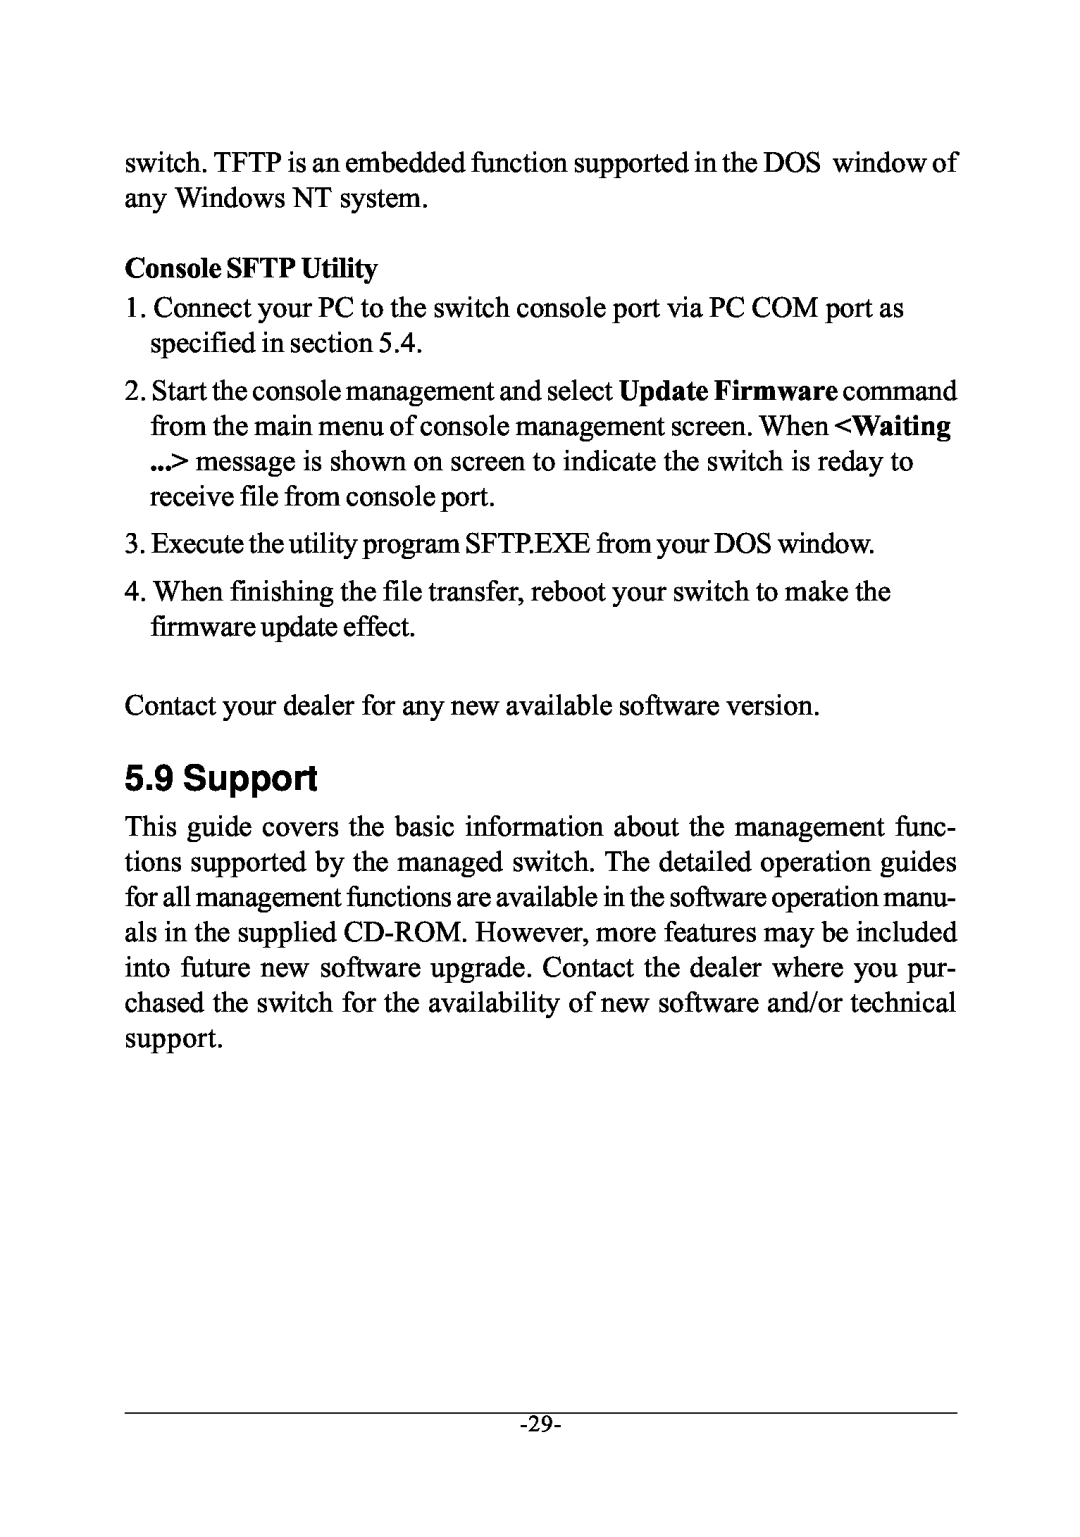 KTI Networks KS-801 manual Support 